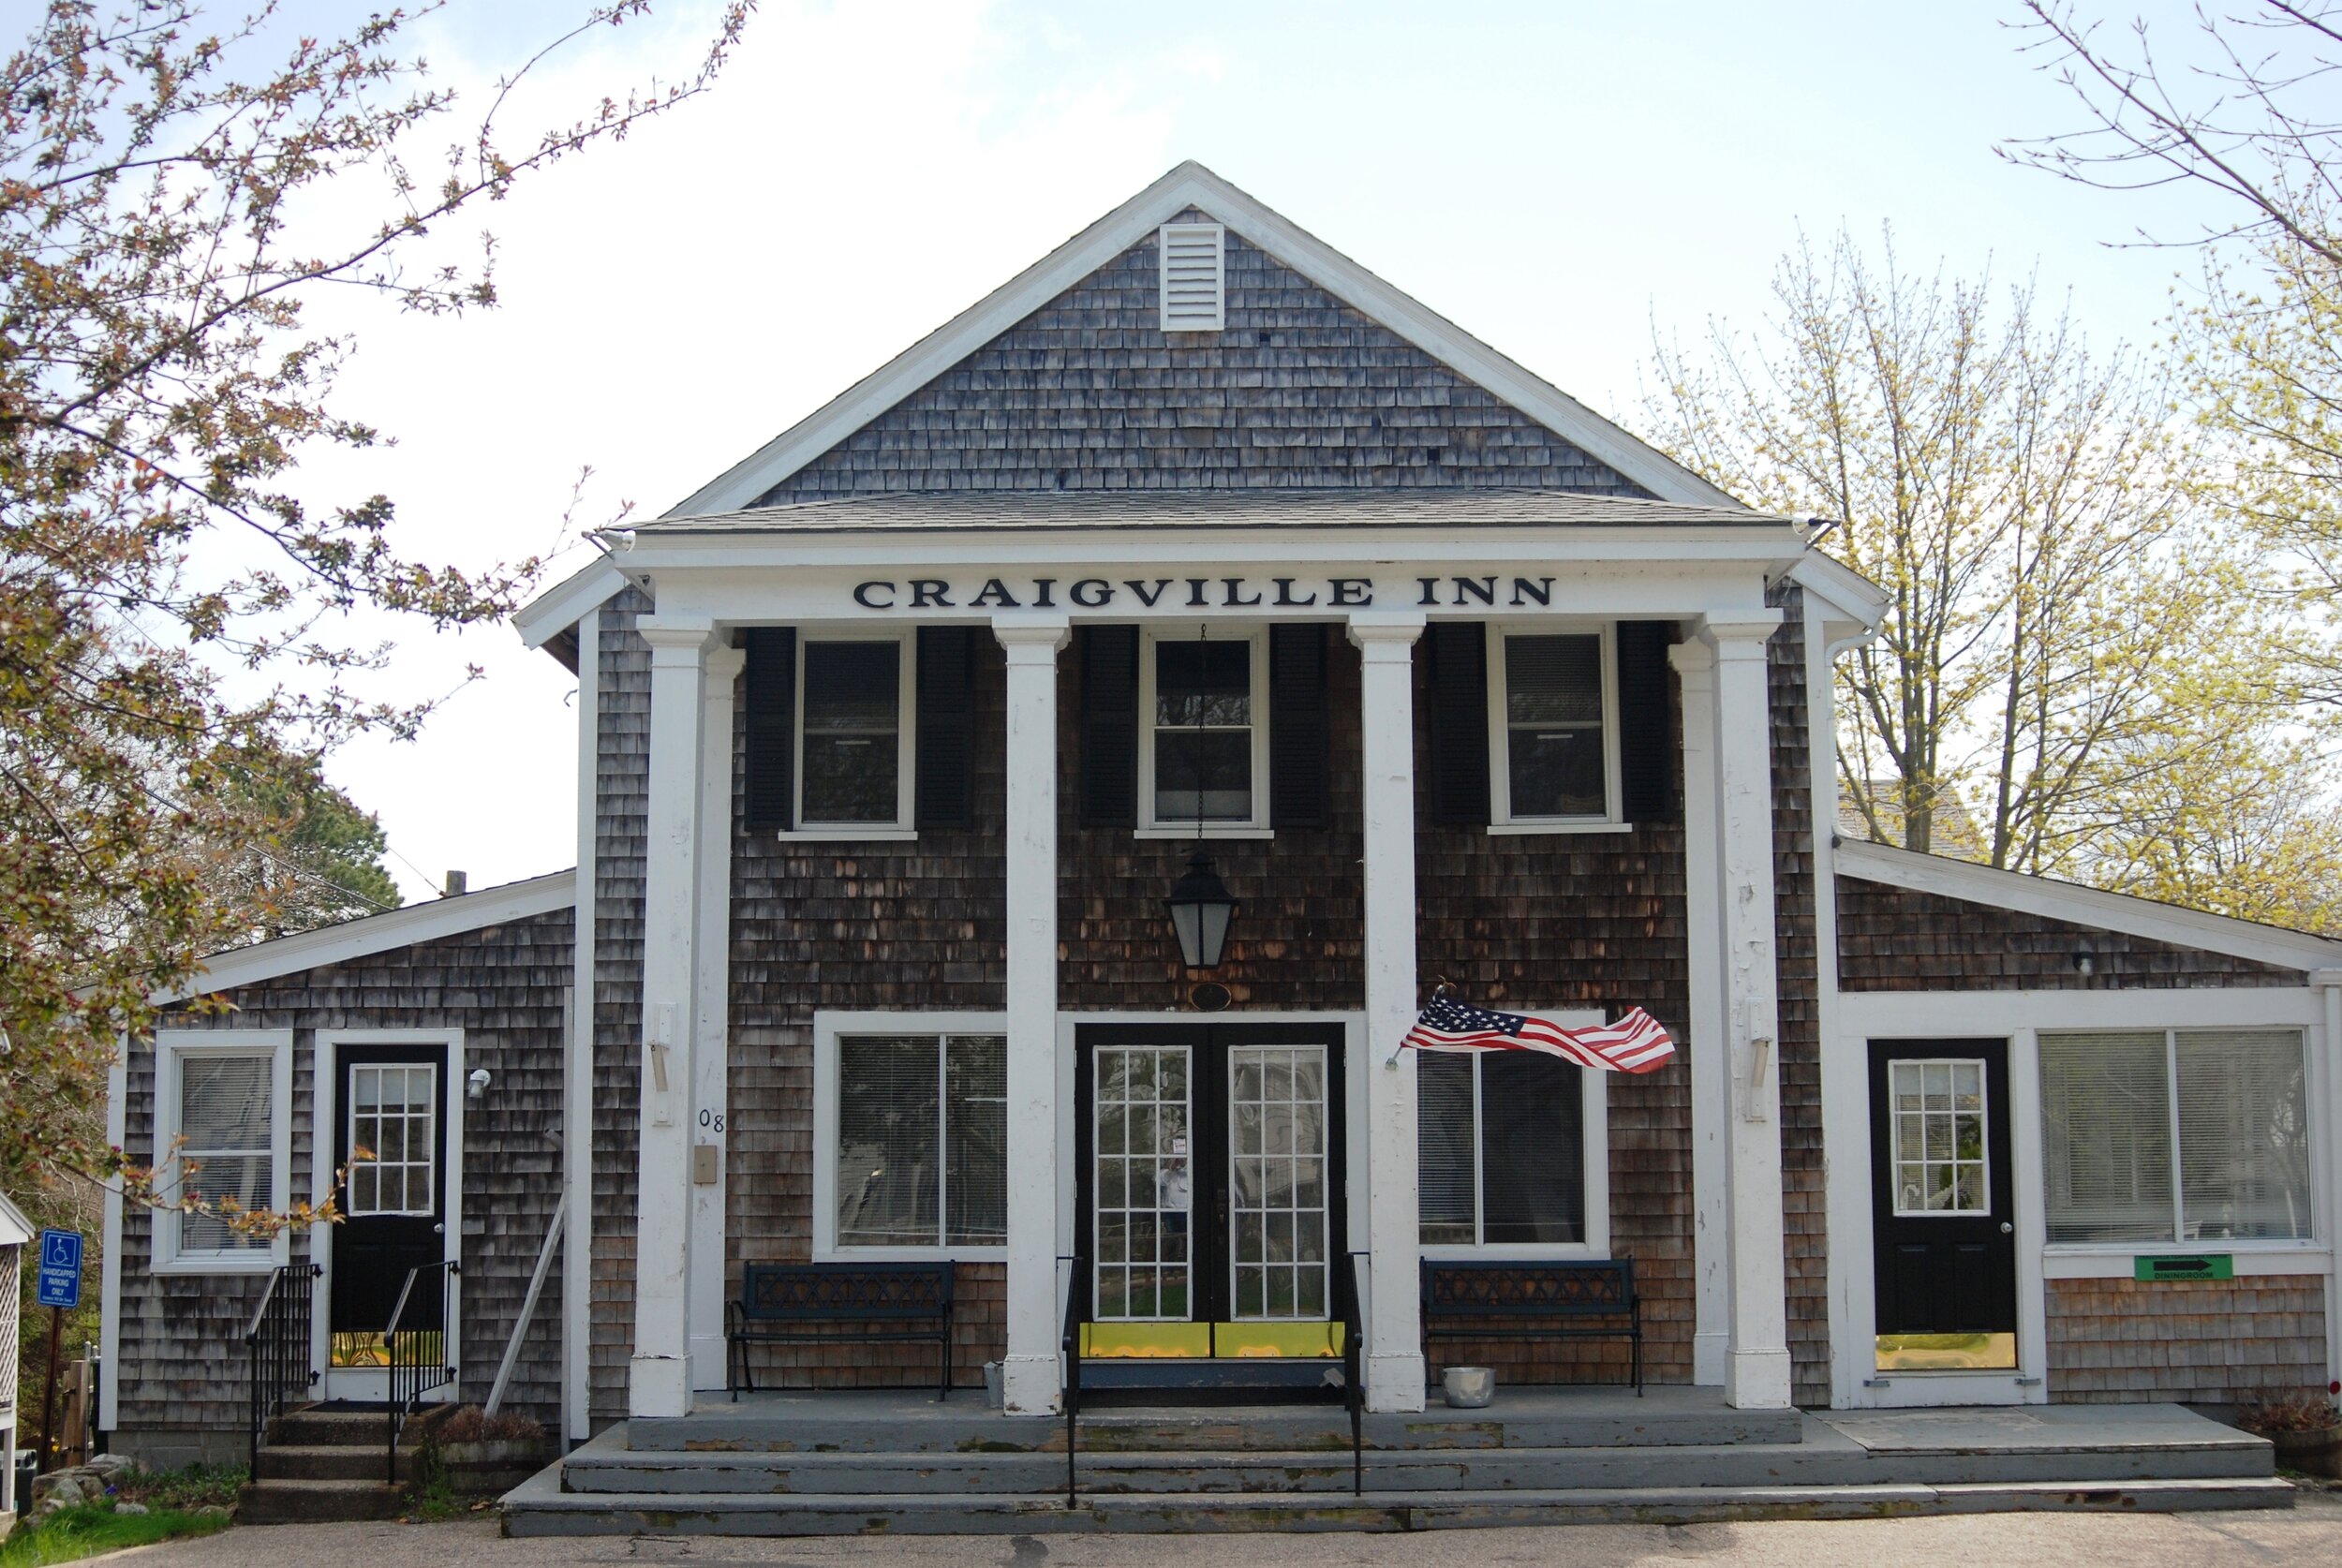 The Craigville Inn